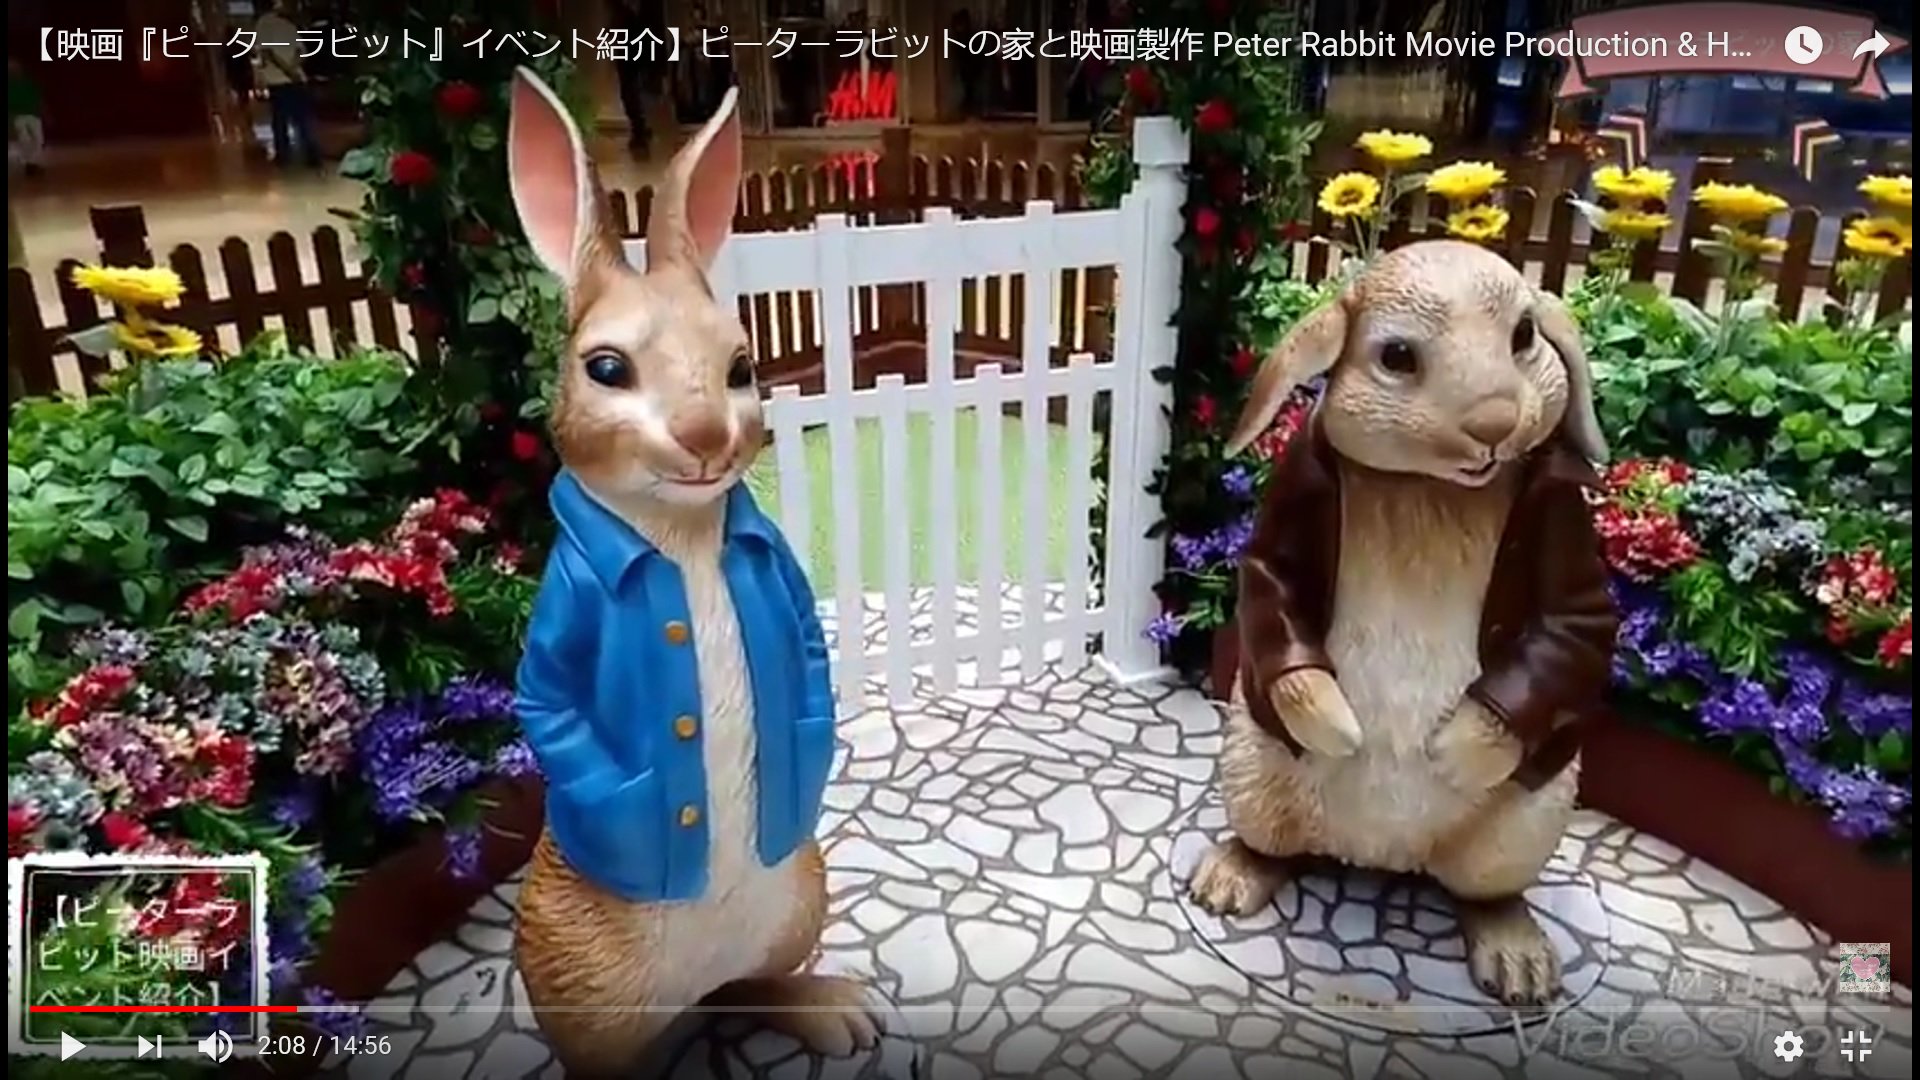 Yurika Yurika New Youtubeビデオuploaded T Co S3vsluzaqp 映画 ピーターラビット イベント紹介 ピーターラビットの家と映画製作 Peter Rabbit Movie Production Home Of Peter Rabbit 映画ピーターラビット 家 映画製作 Peterrabbit